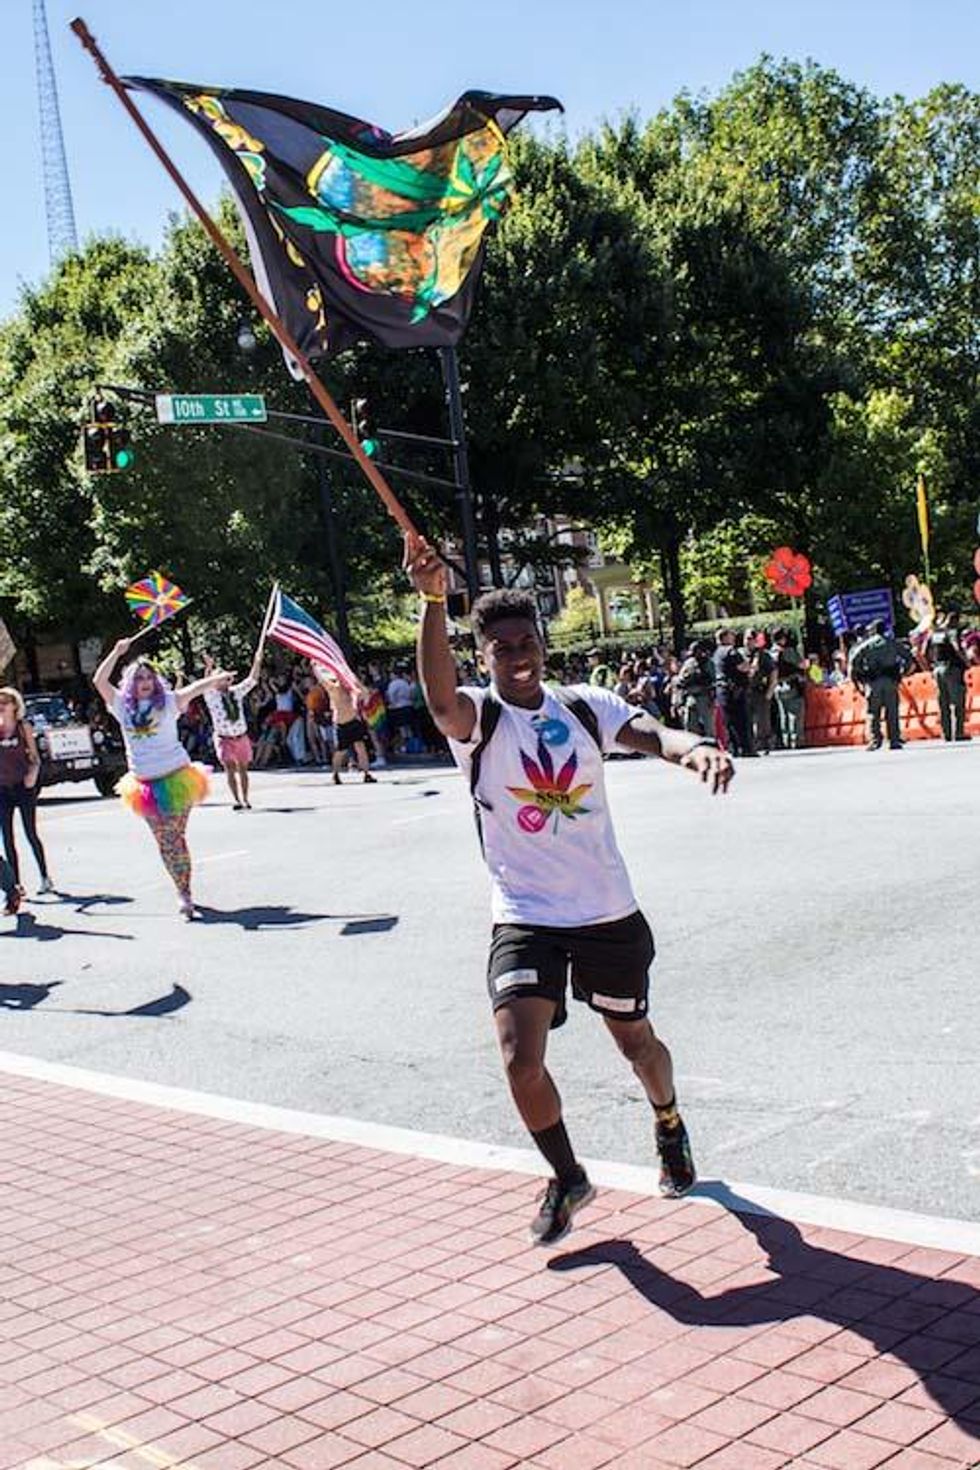 Atlanta Pride